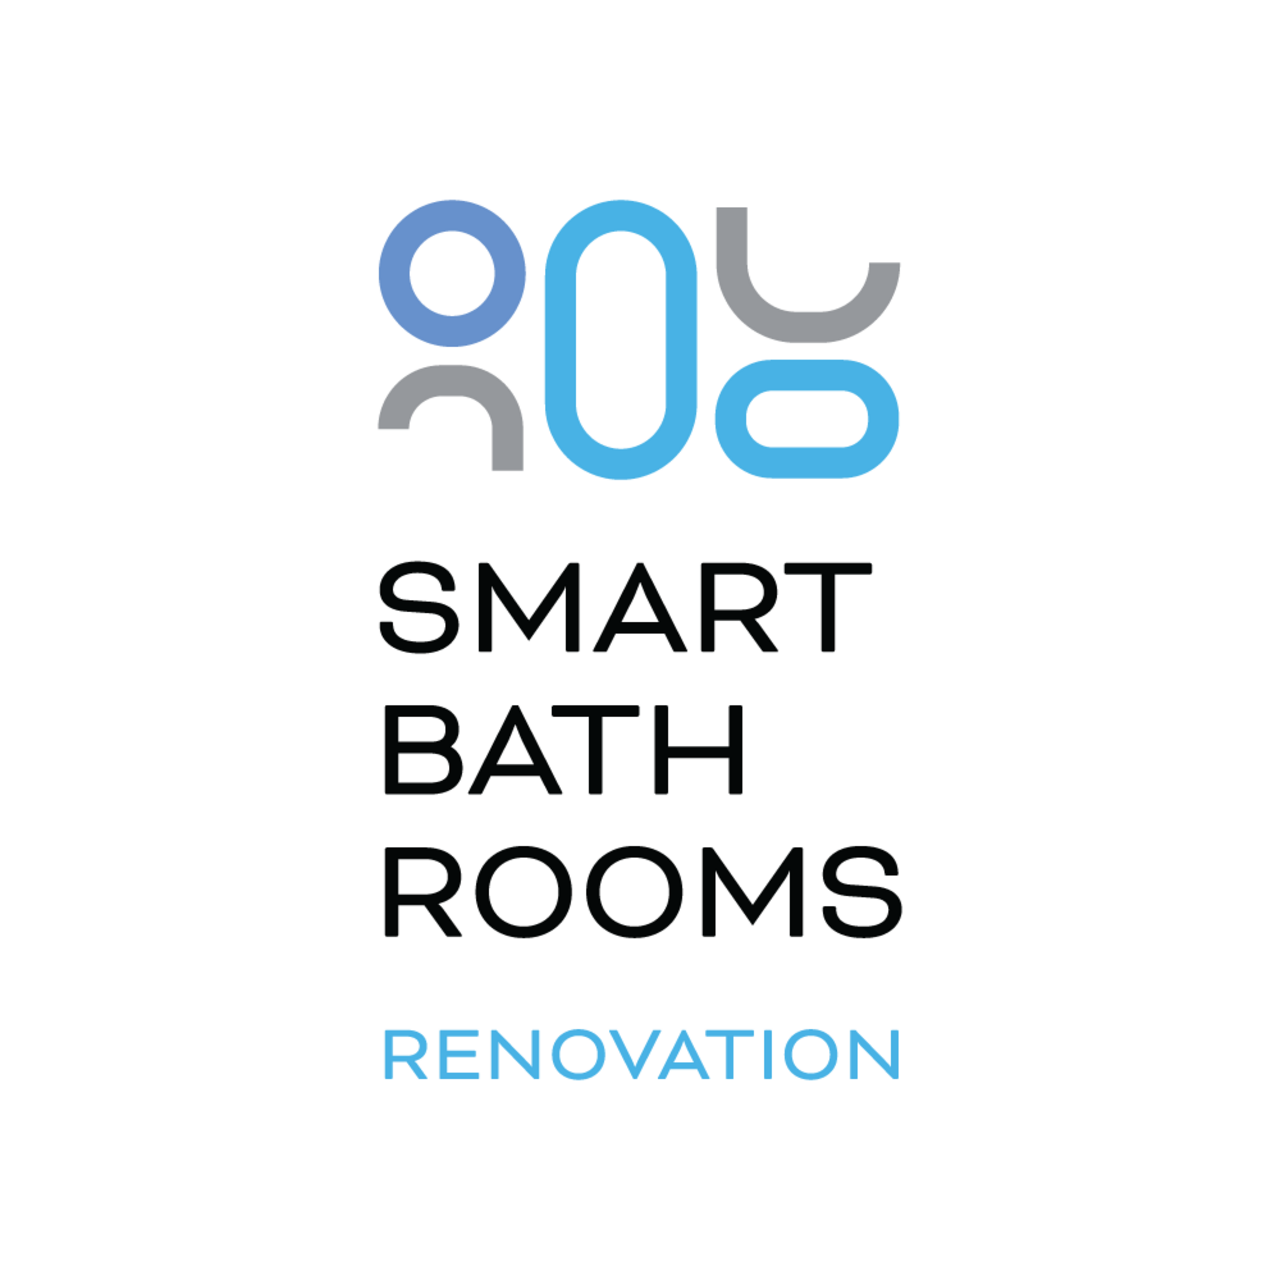 Smart Bathrooms Renovation's logo